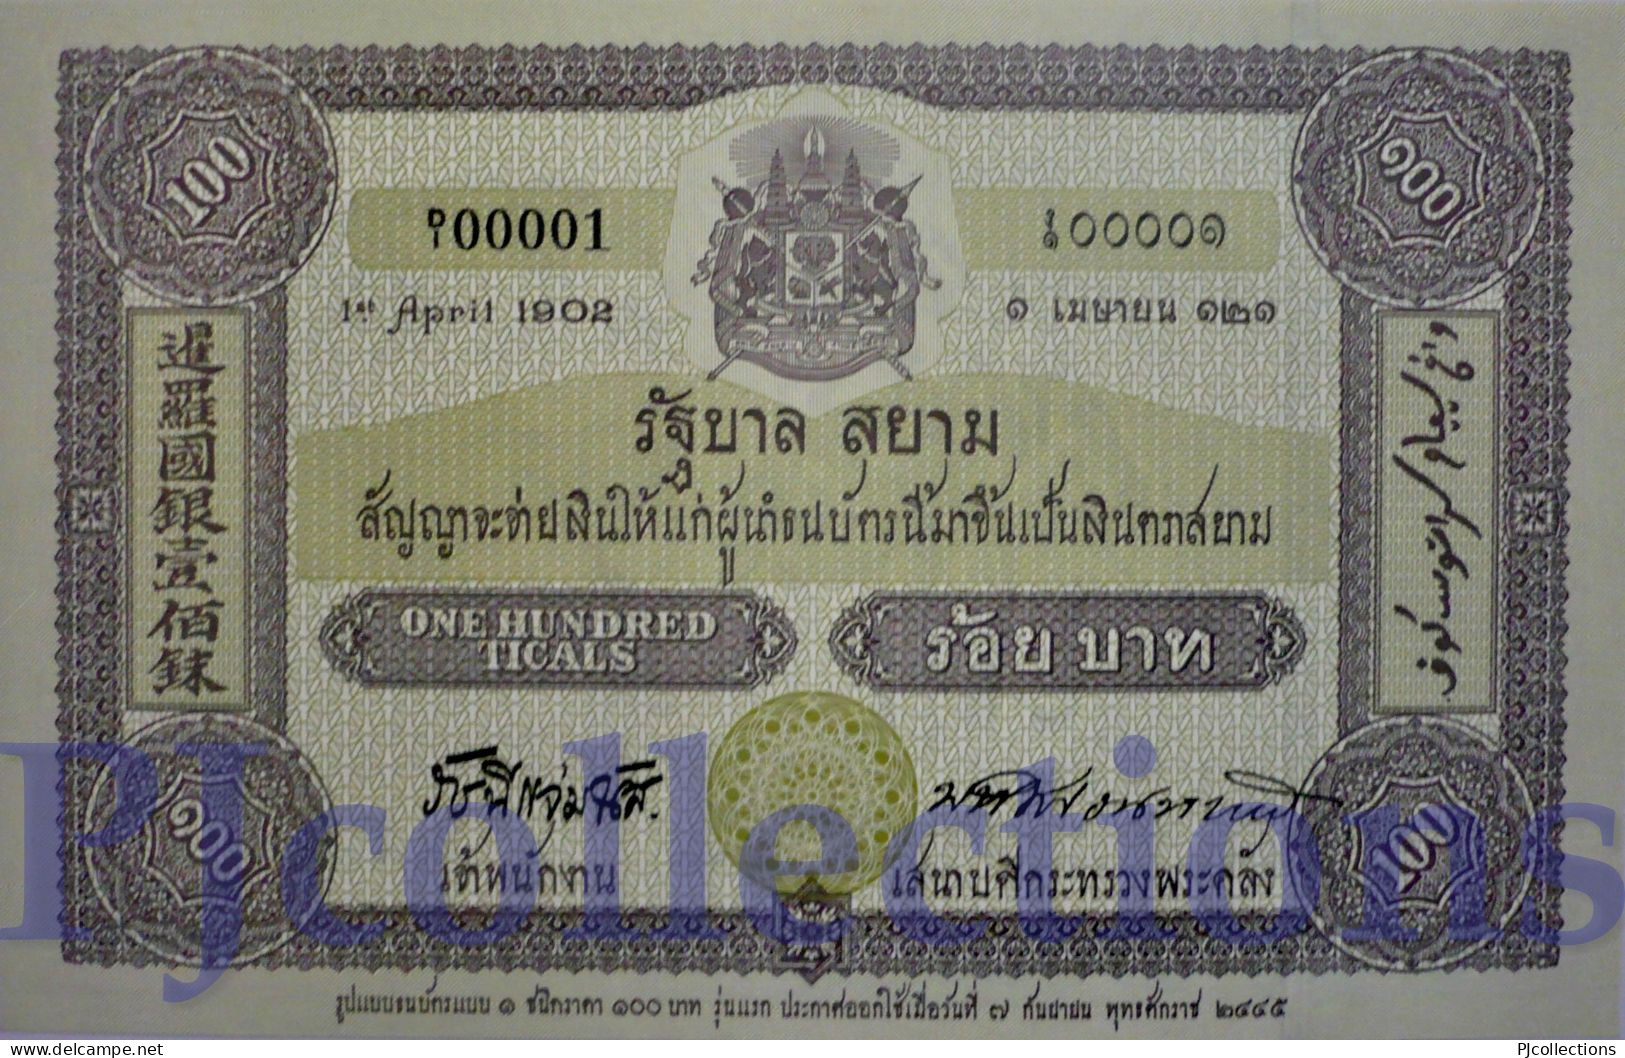 THAILAND 100 BAHT 2002 PICK 110 UNC - Tailandia